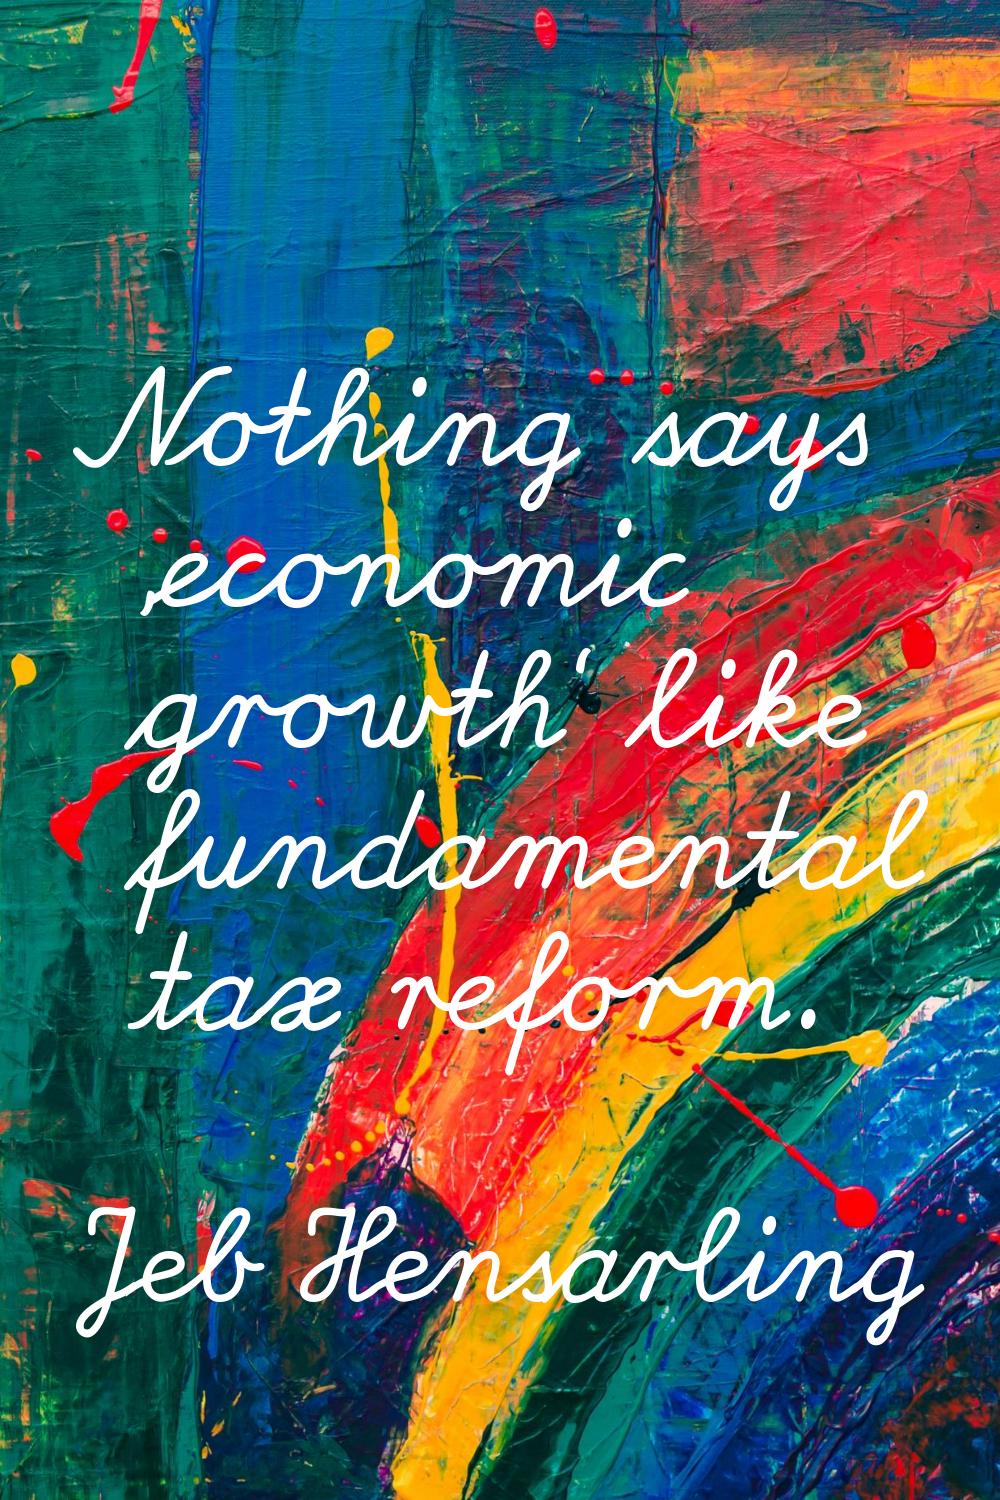 Nothing says 'economic growth' like fundamental tax reform.